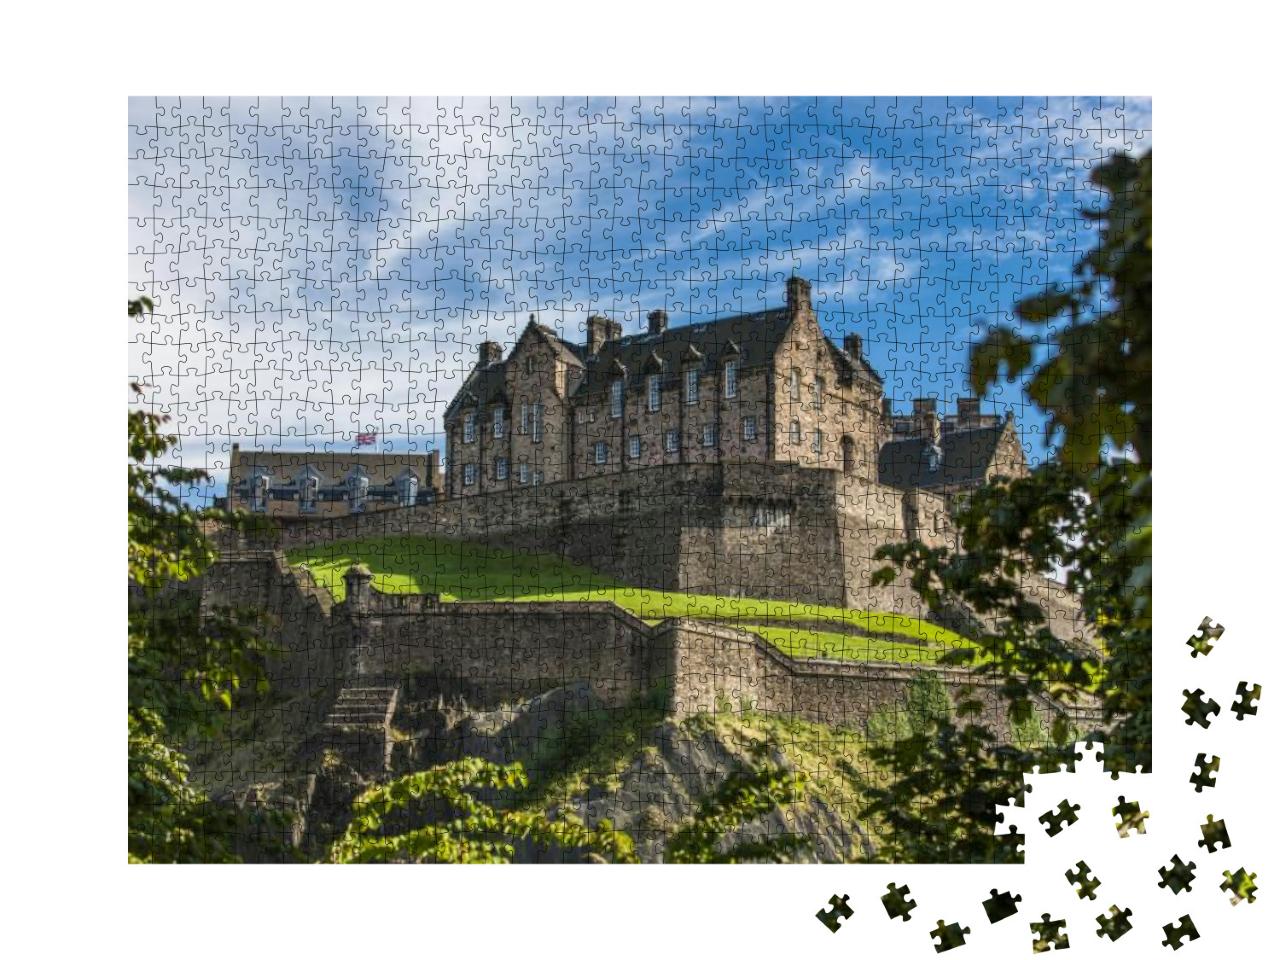 Puzzle 1000 Teile „Blick auf das Edinburgh Castle“